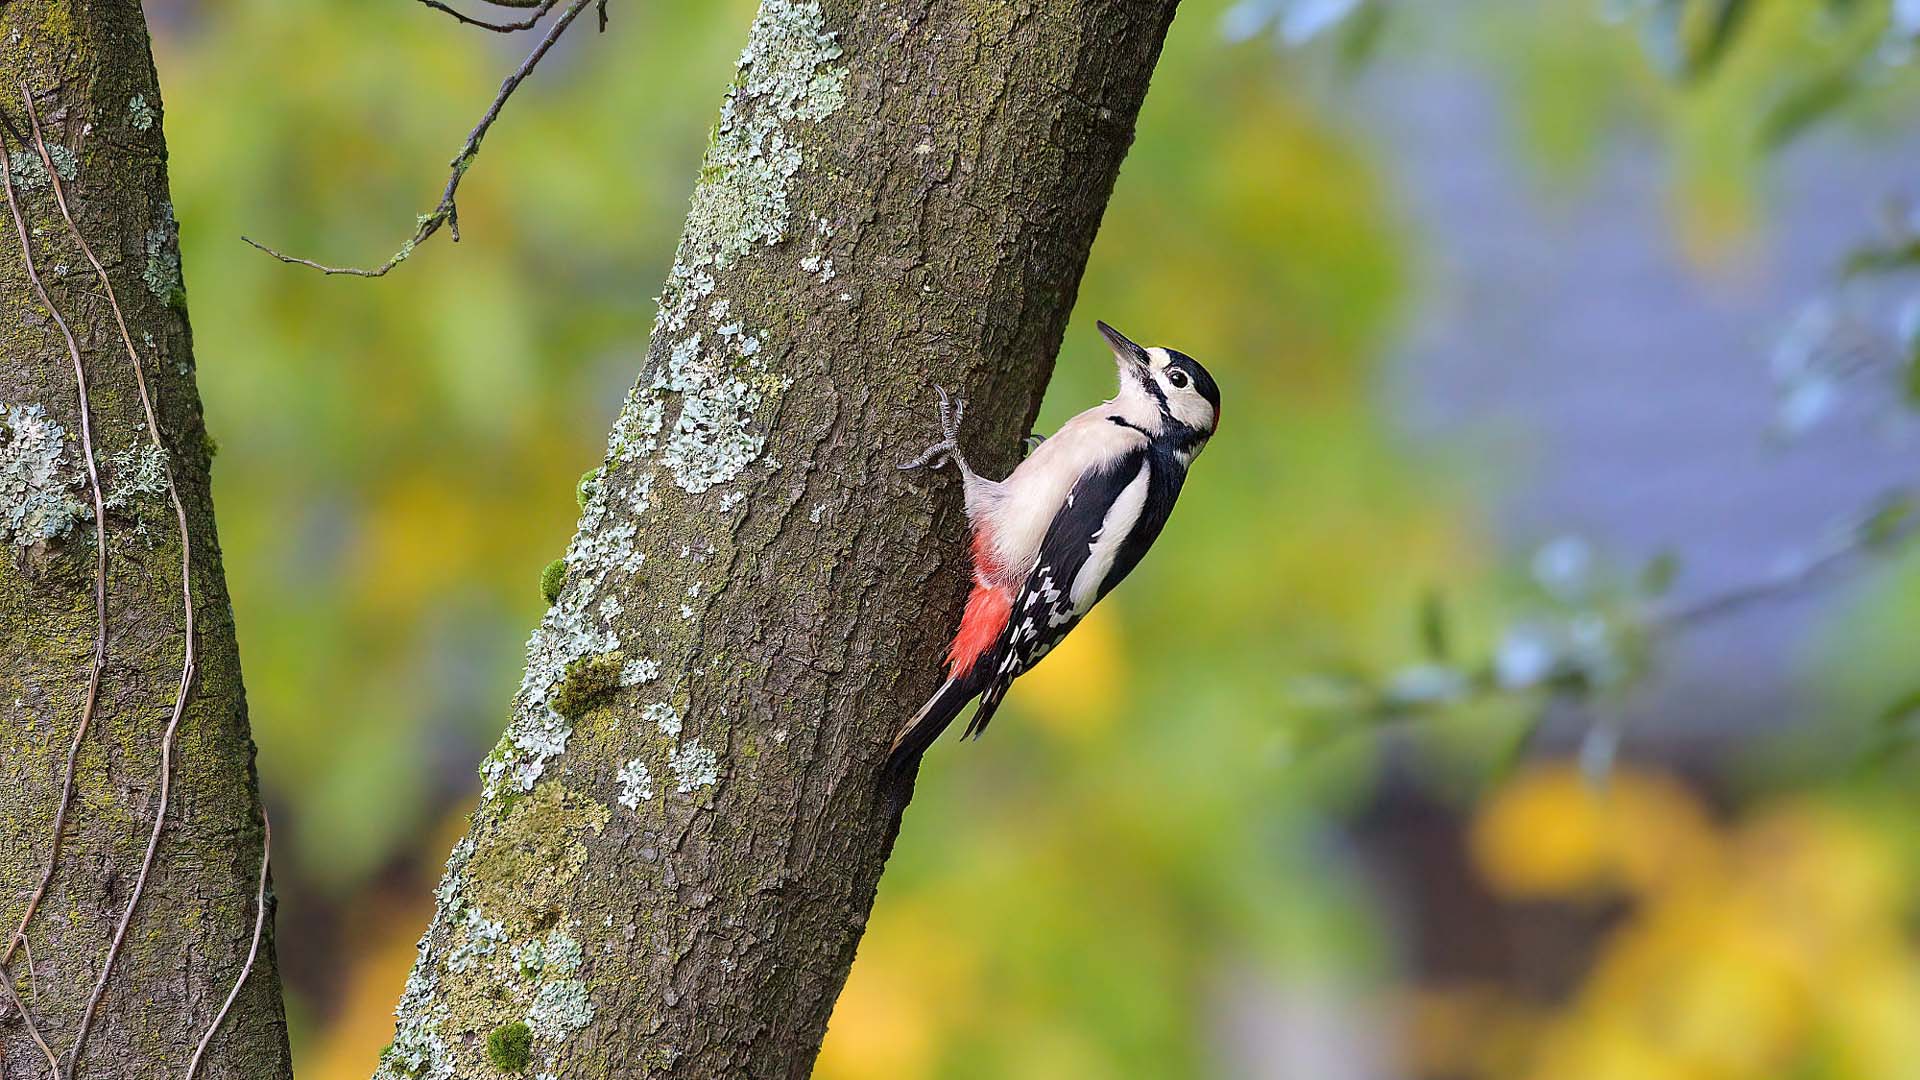 Black White Red Woodpecker Is Perching On Tree Trunk In Green Blur